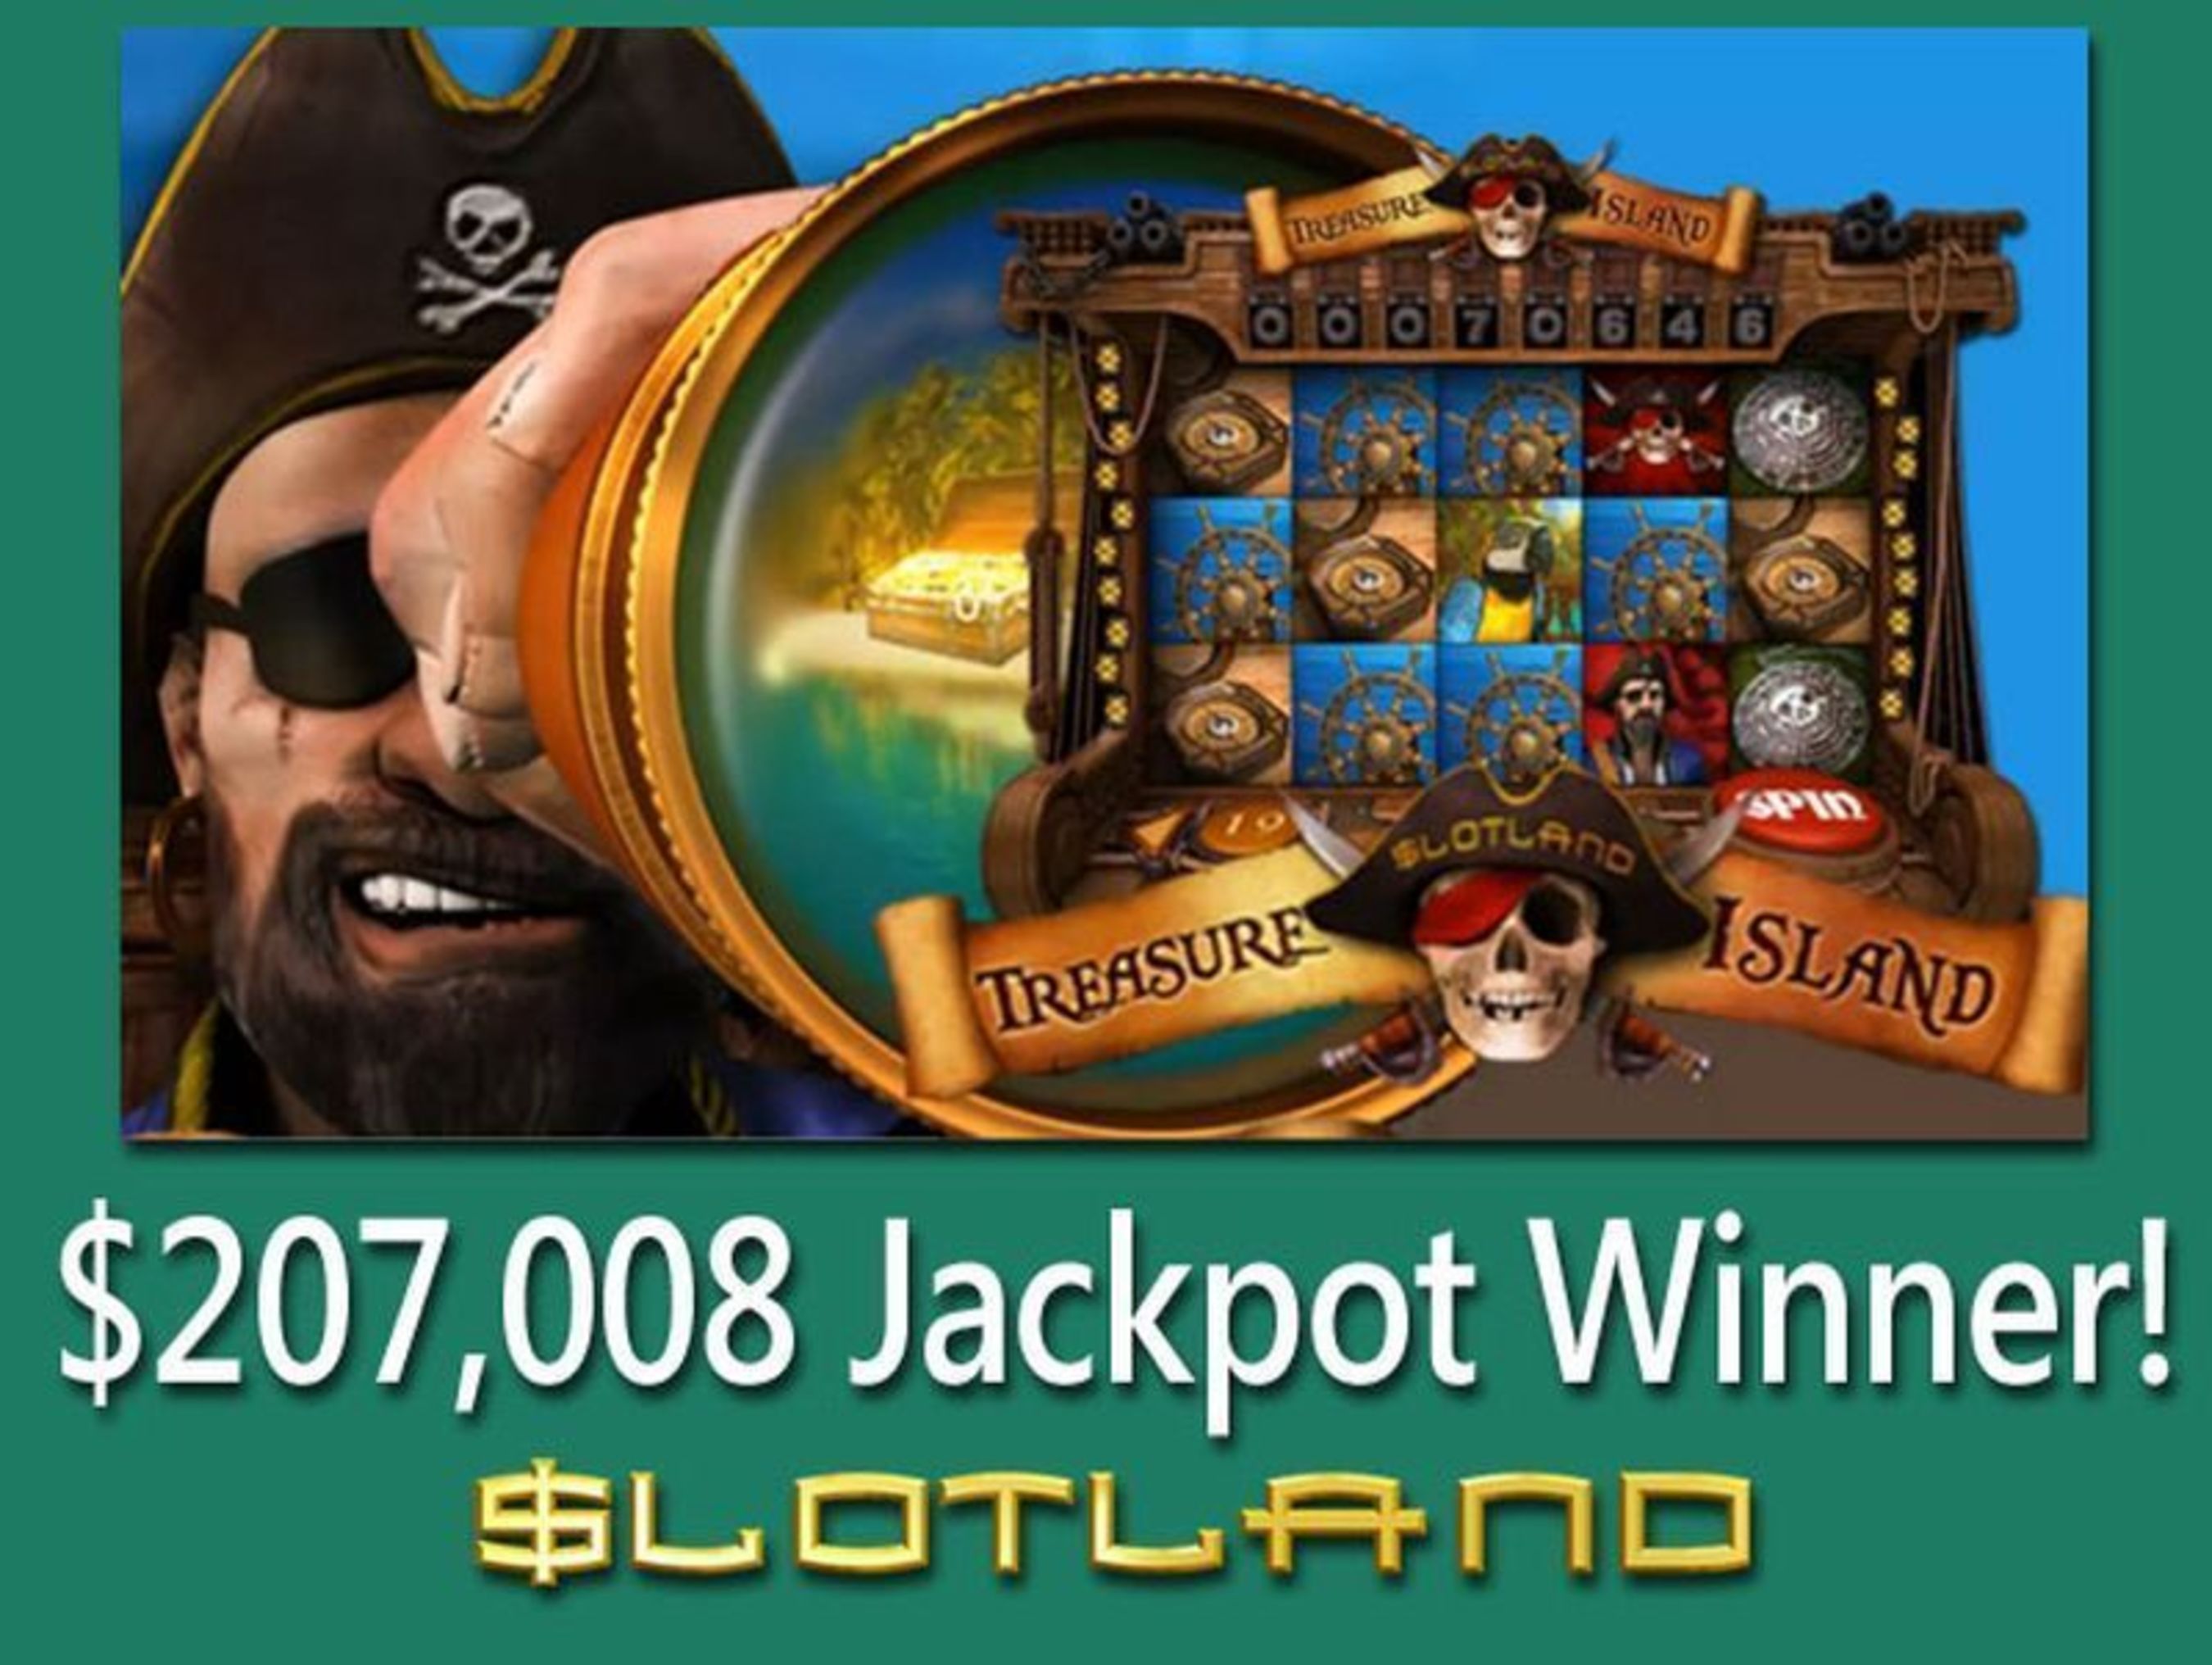 Slotland.com Player Hits Near Record Breaking Online Progressive Jackpot of $207,008 (PRNewsFoto/Slotland)